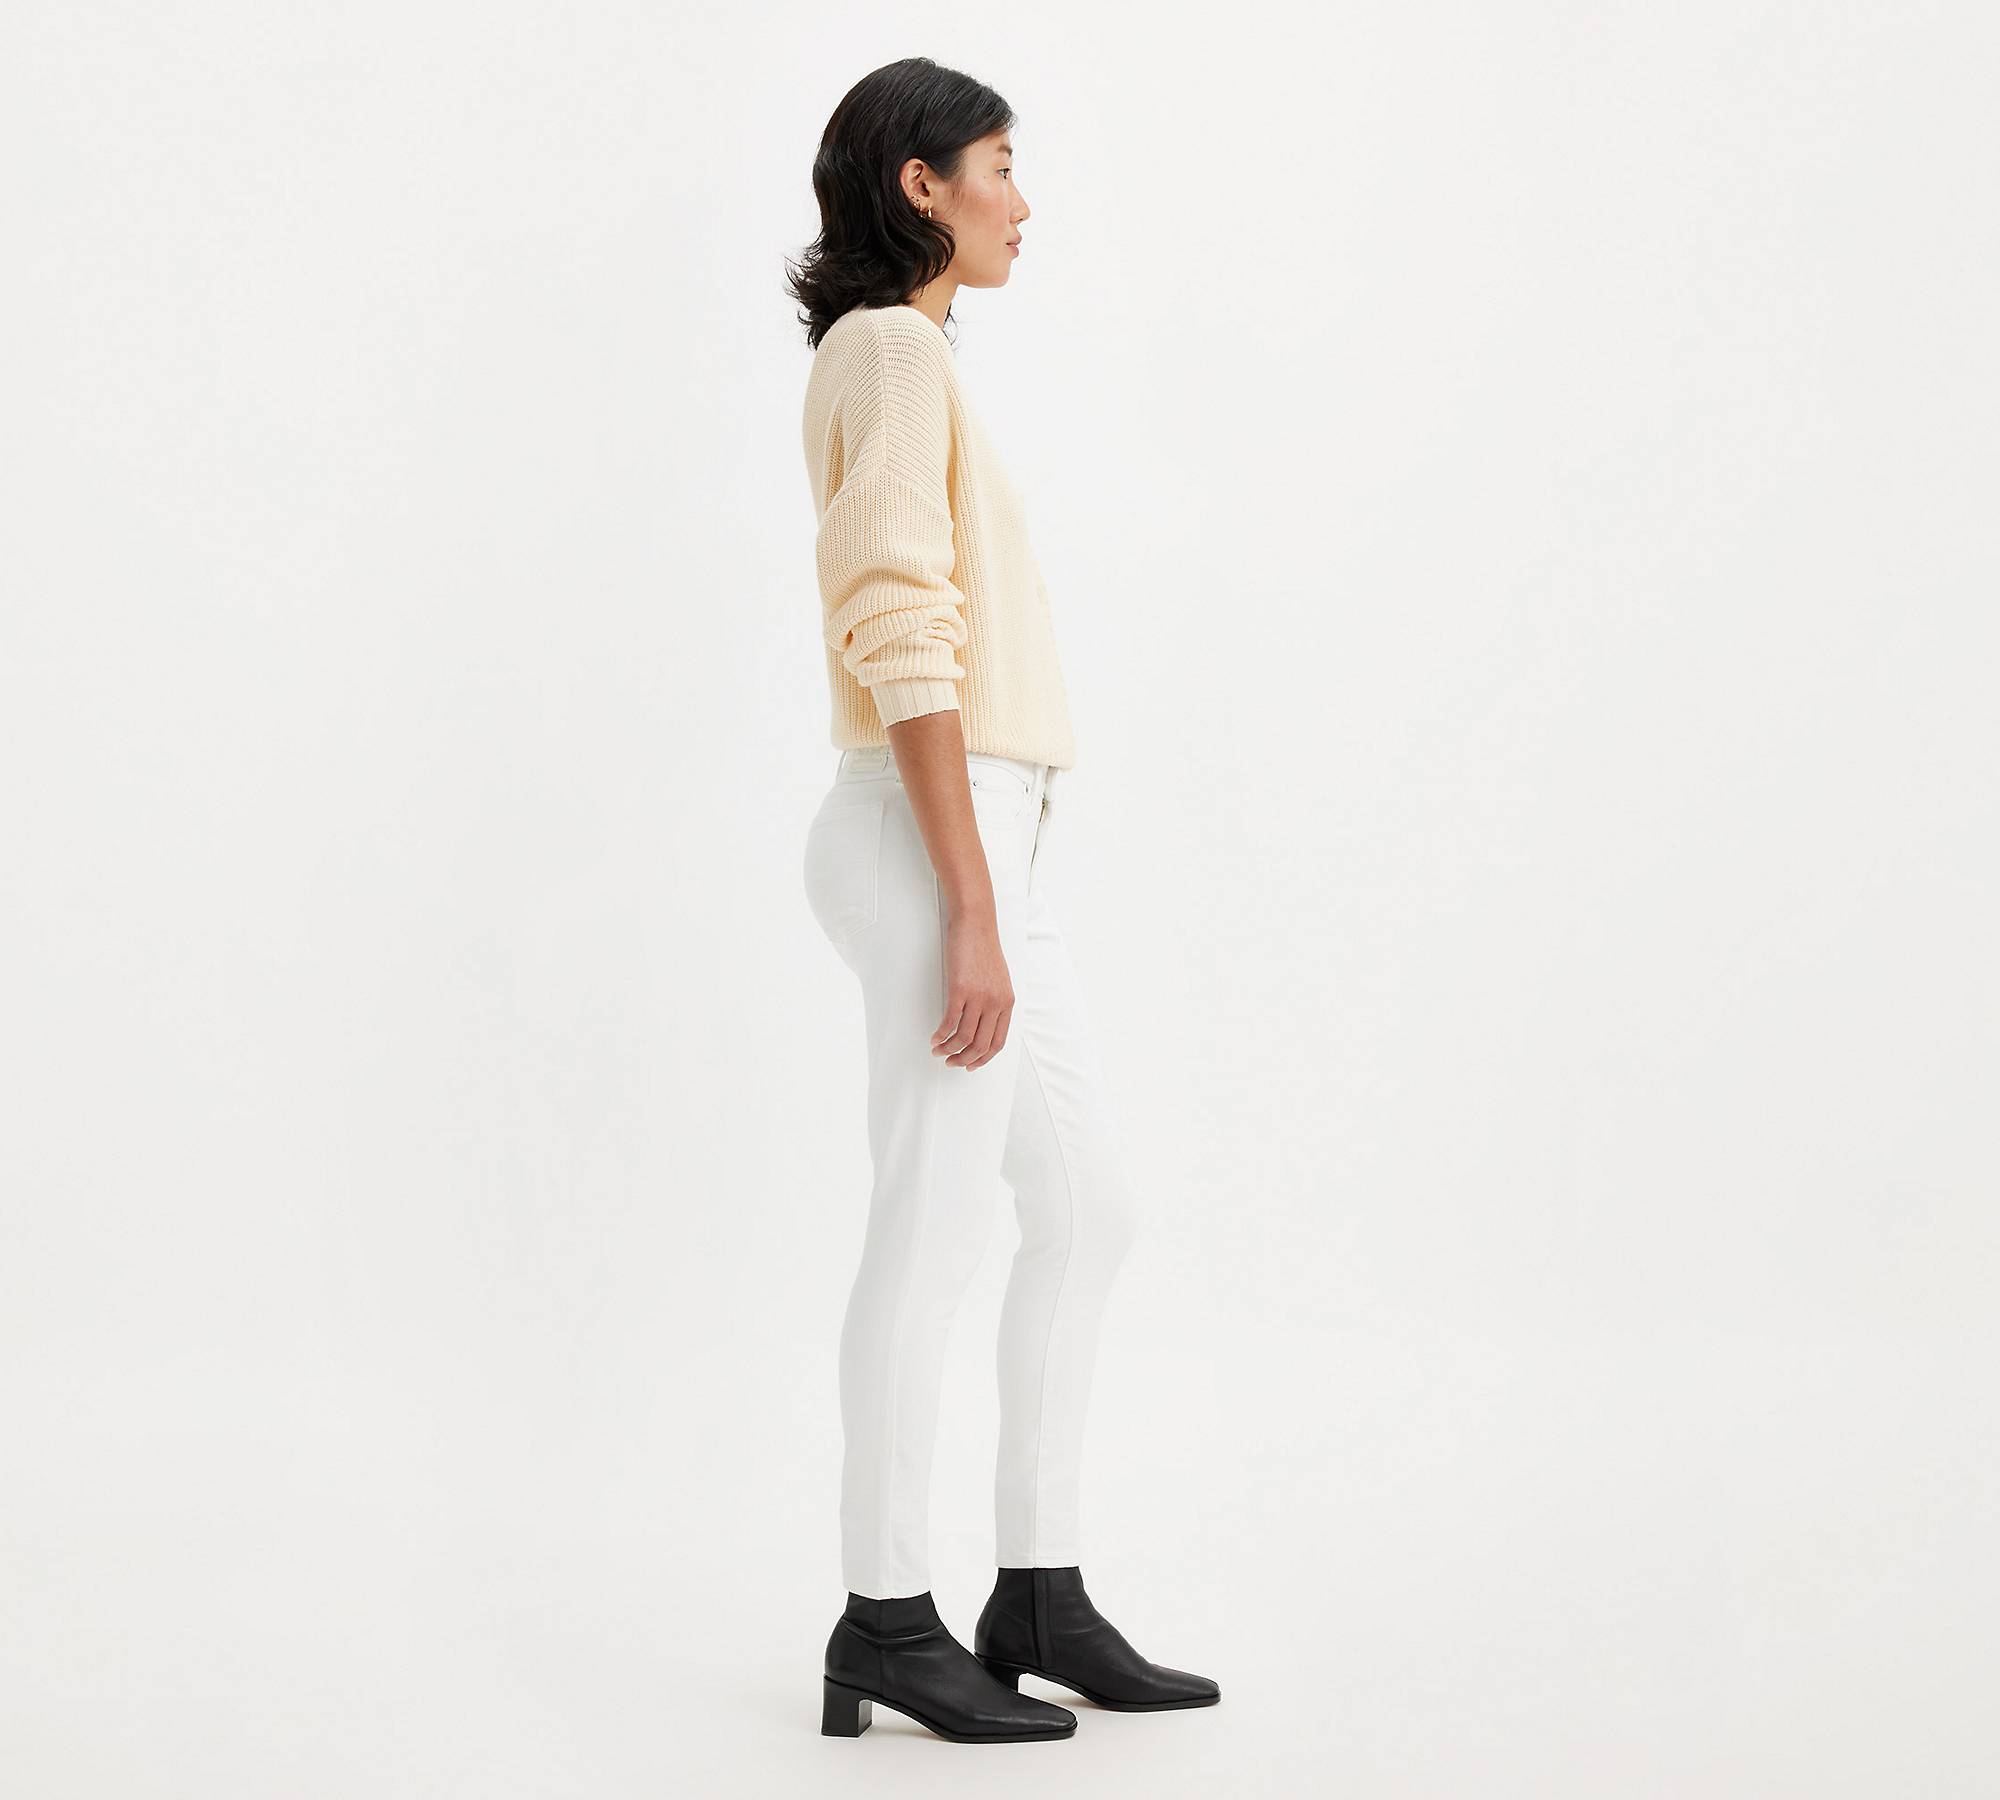 711 Skinny Women's Jeans - White | Levi's® US